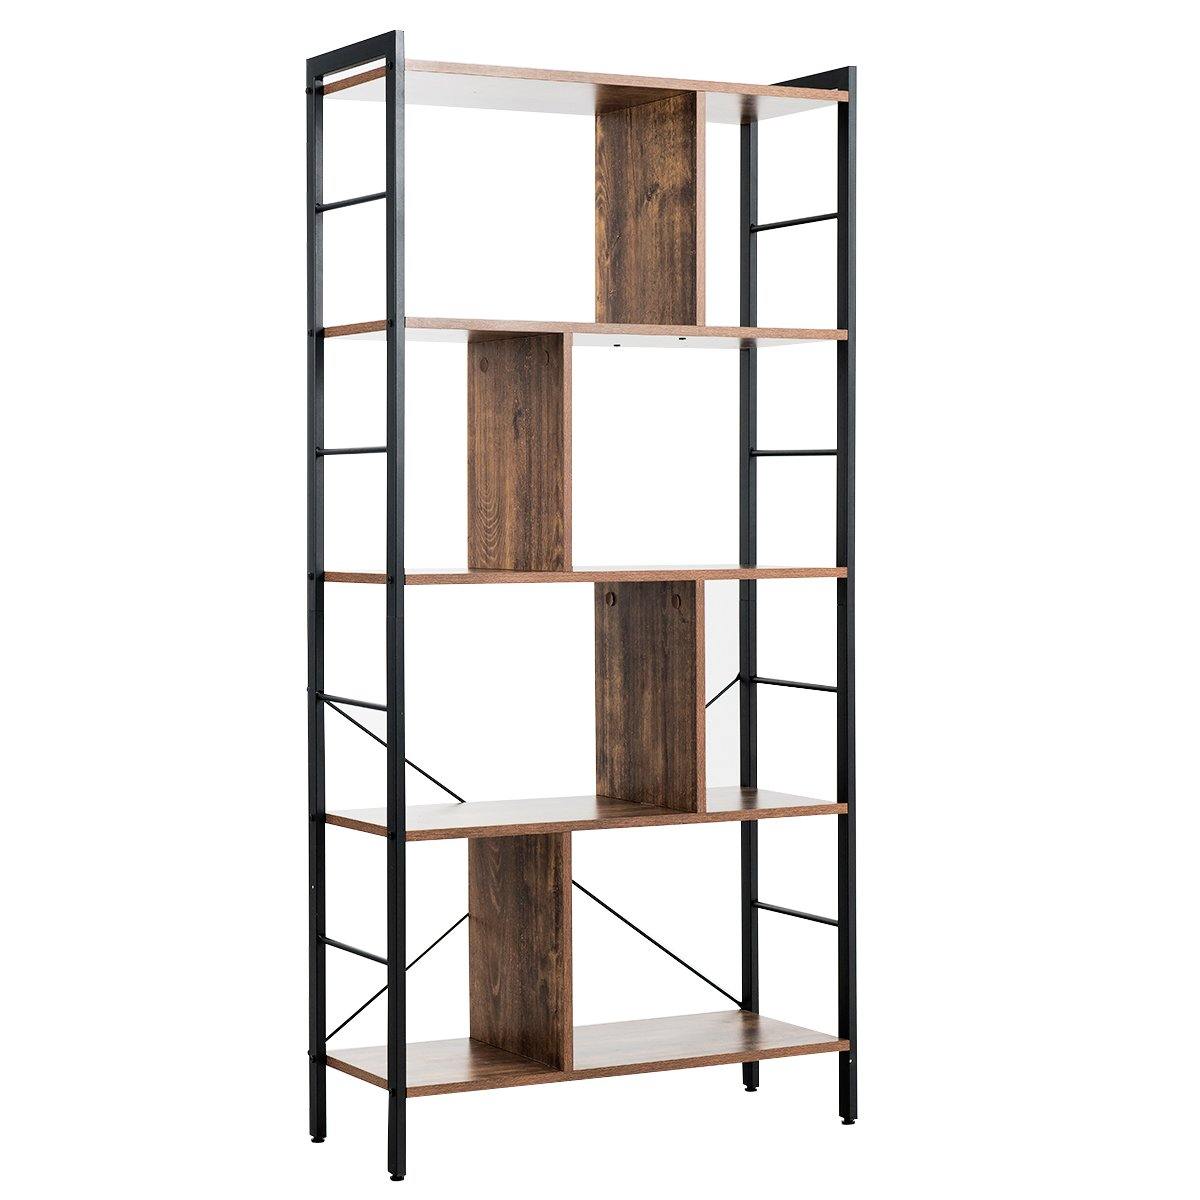 4-Tier Bookshelf, Industrial Style Bookcase with Metal Frame (Rustic Brown) - Giantexus